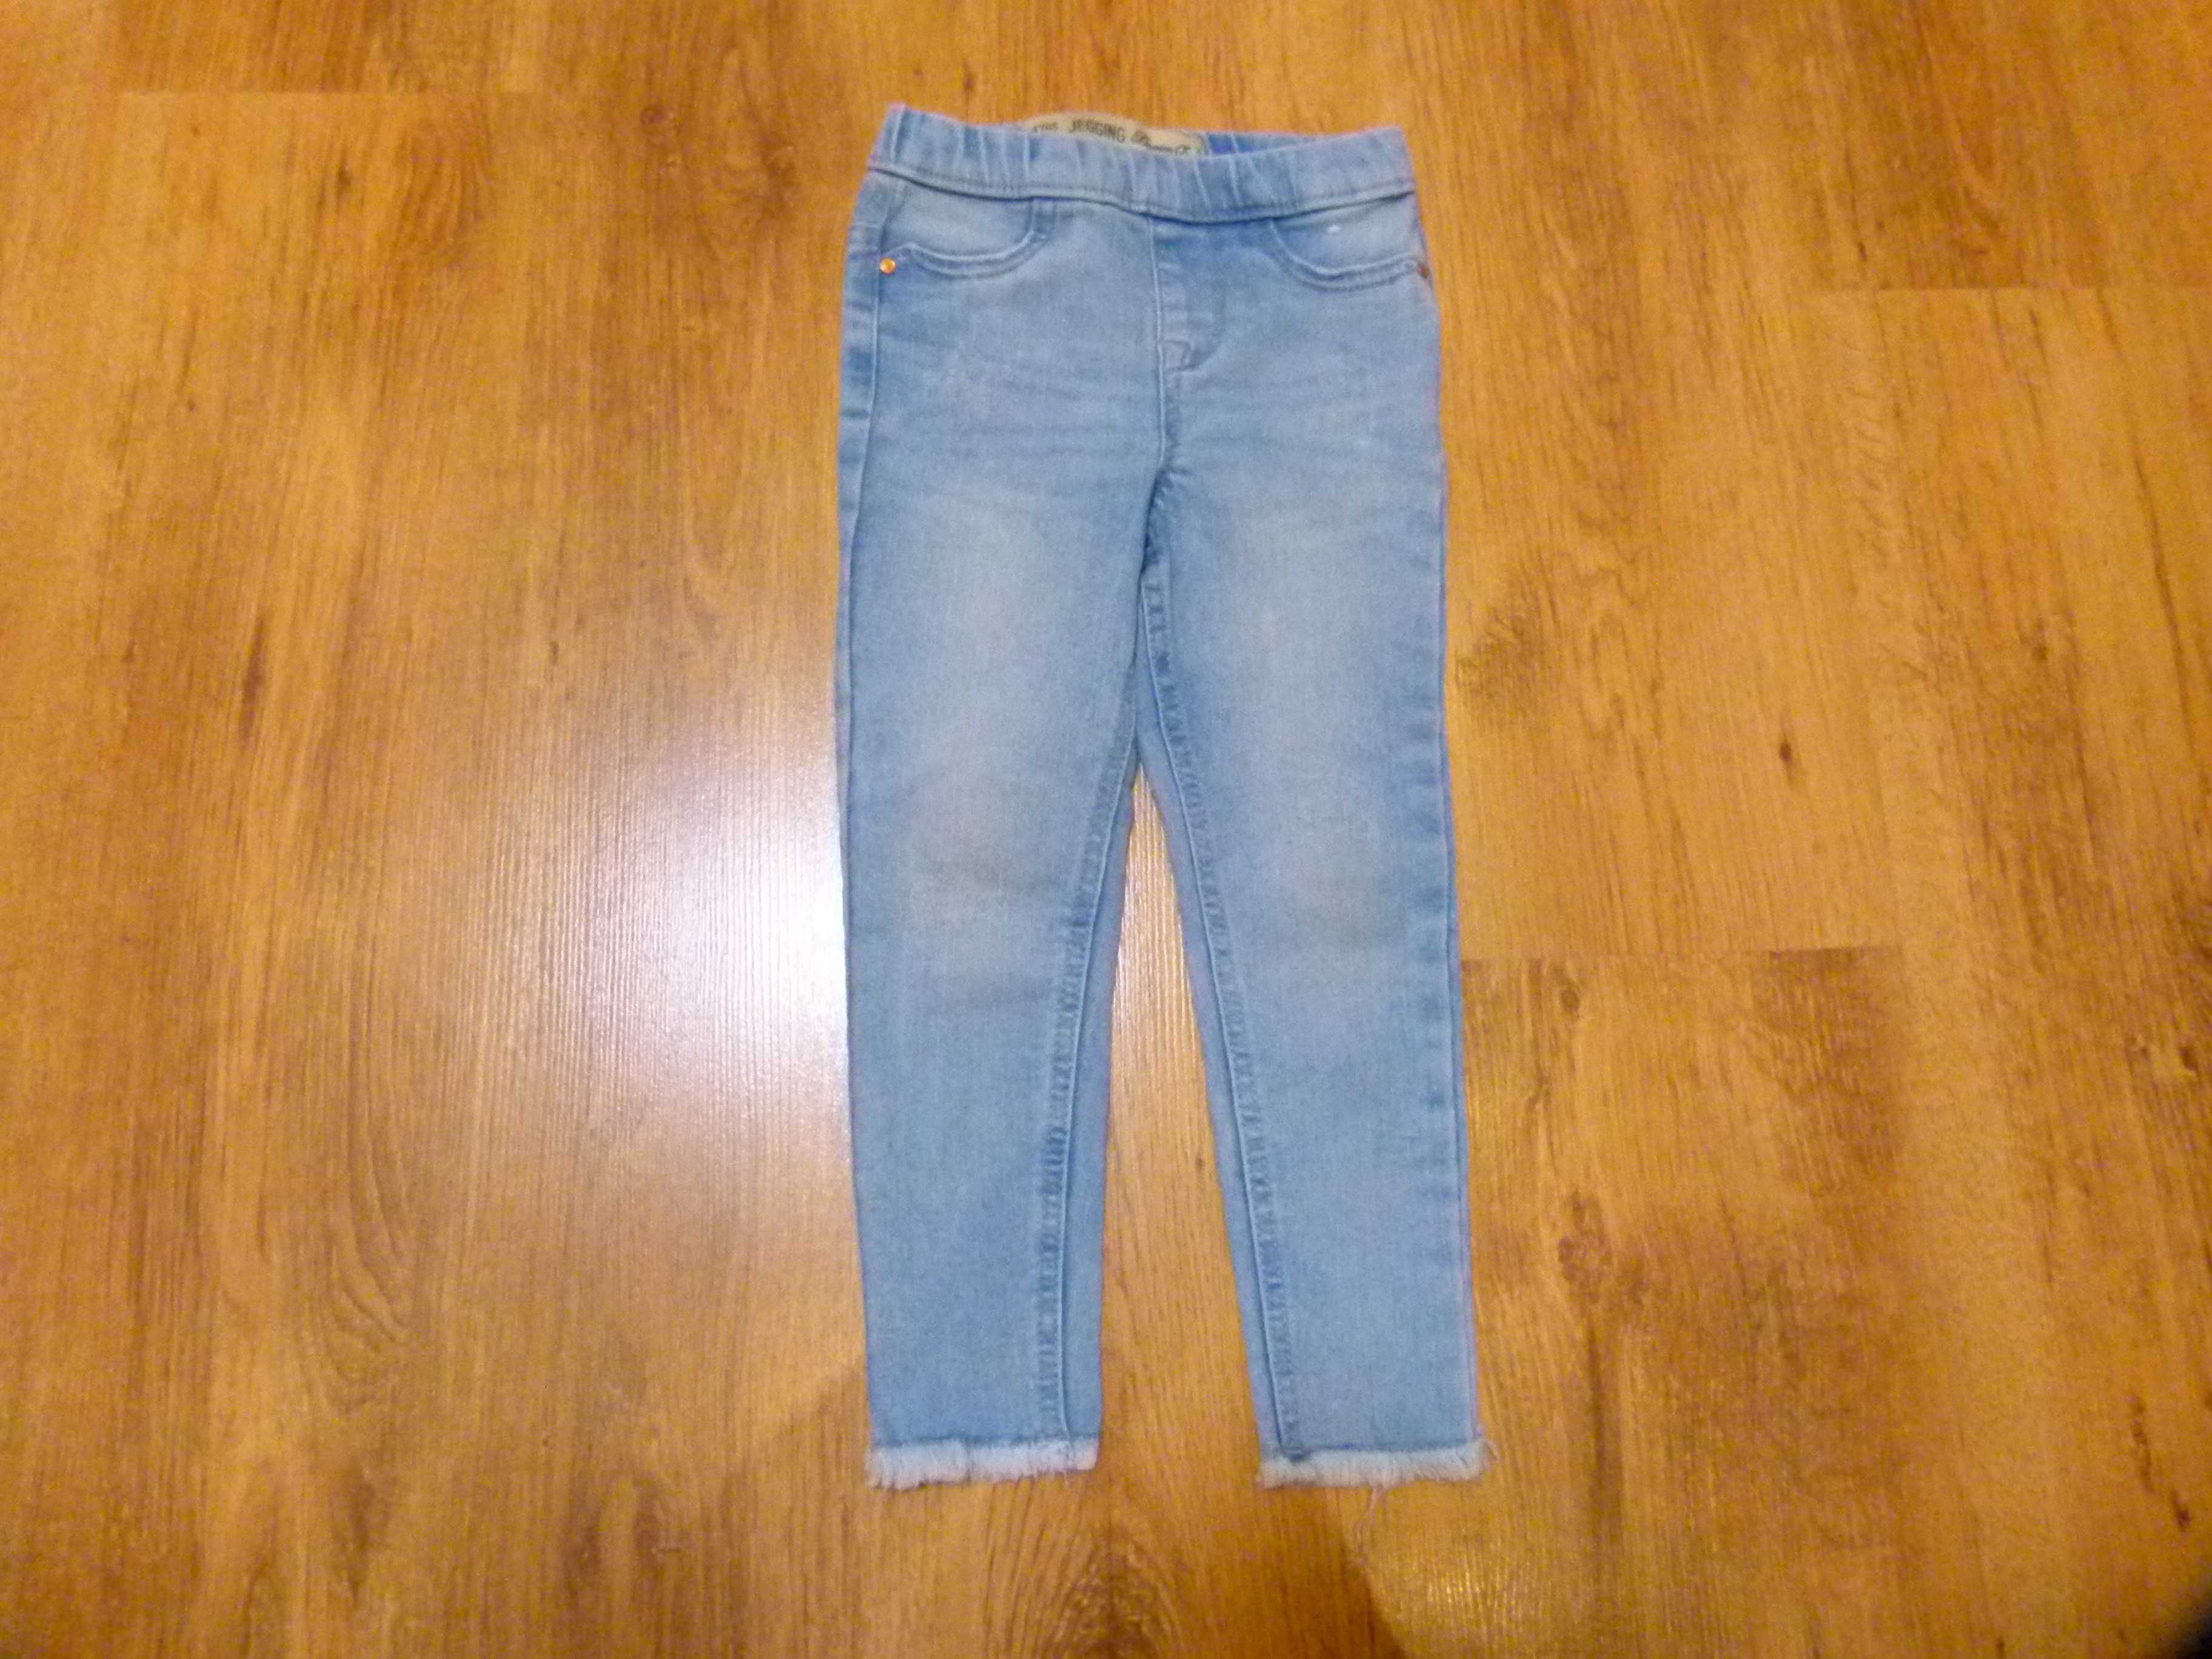 rozm 104 Primark spodnie jeans jegginsy jasne